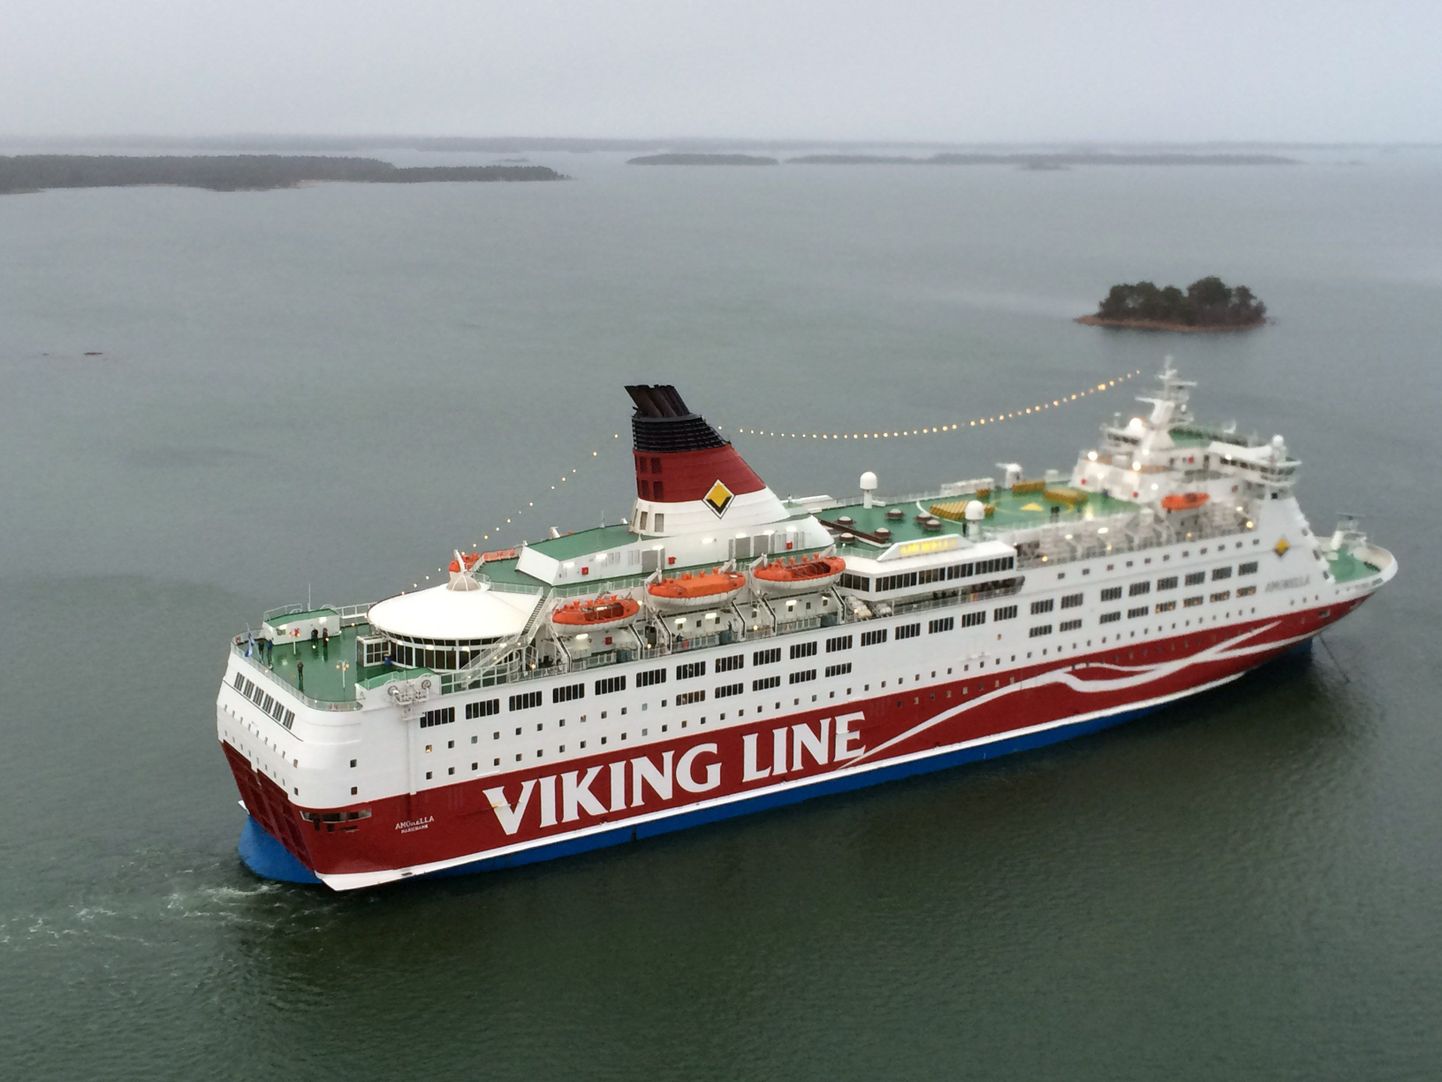 Viking Line'i reisiparvlaev Amorella.